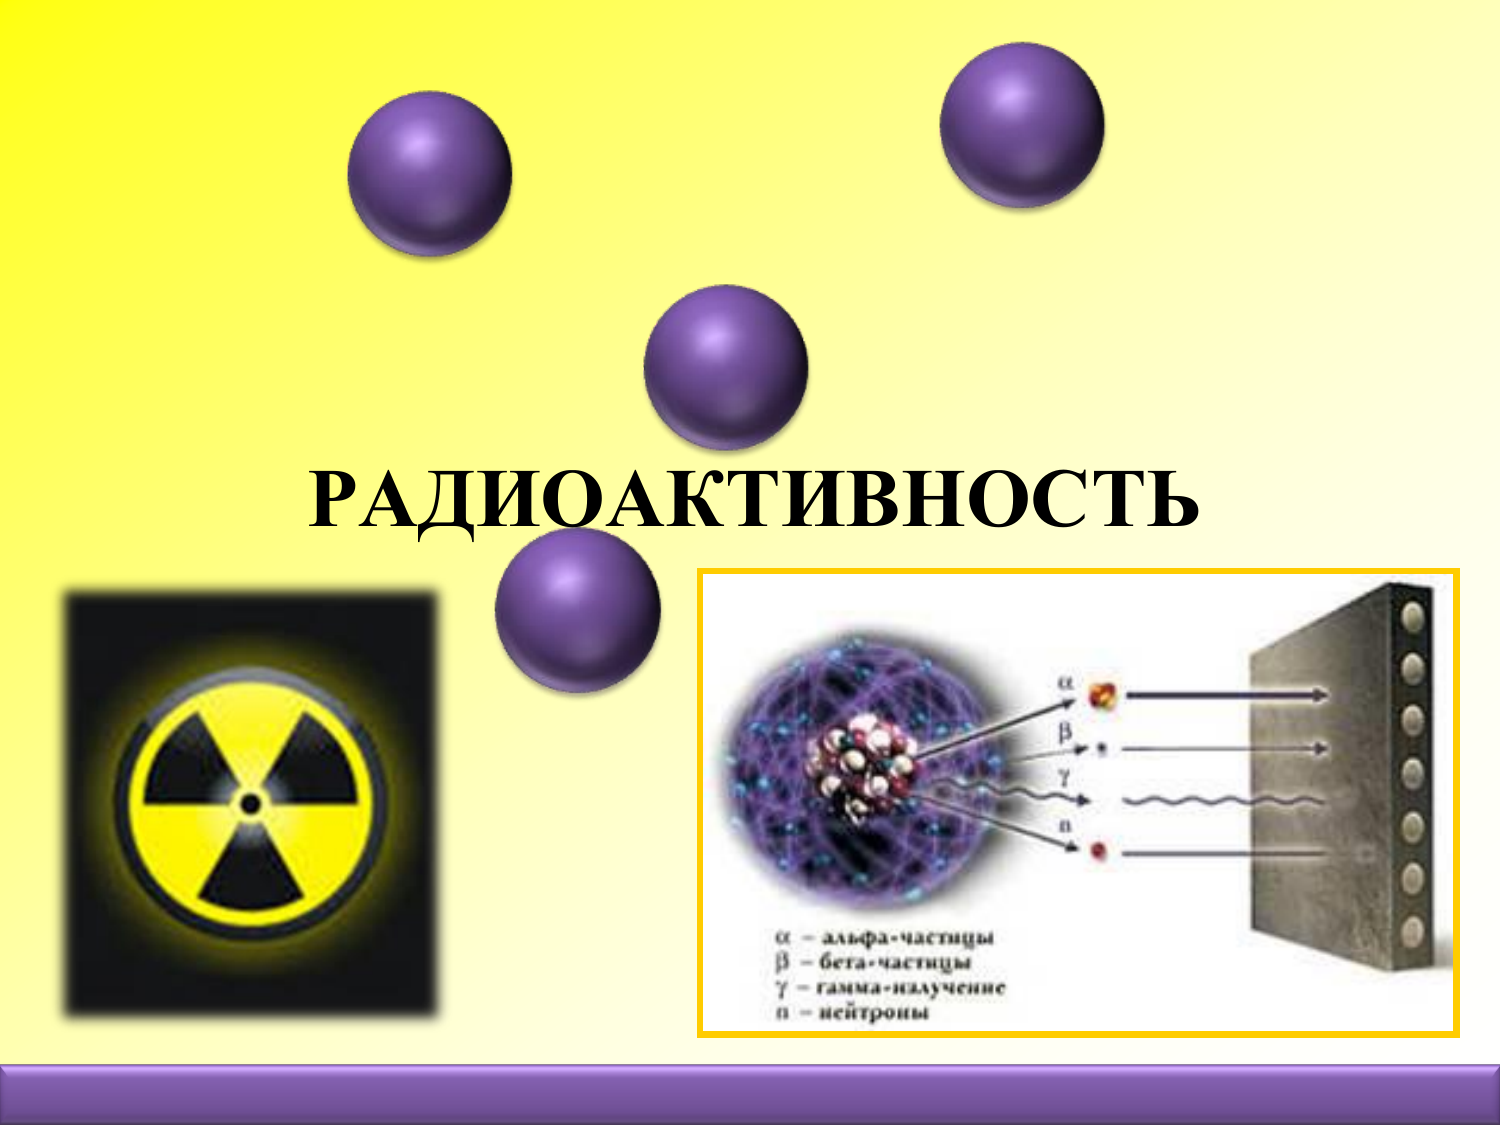 Радиоактивный распад физика. Радиоактивность. Радиоактивность физика. Радиация в физике. Радиоактивное излучение физика.